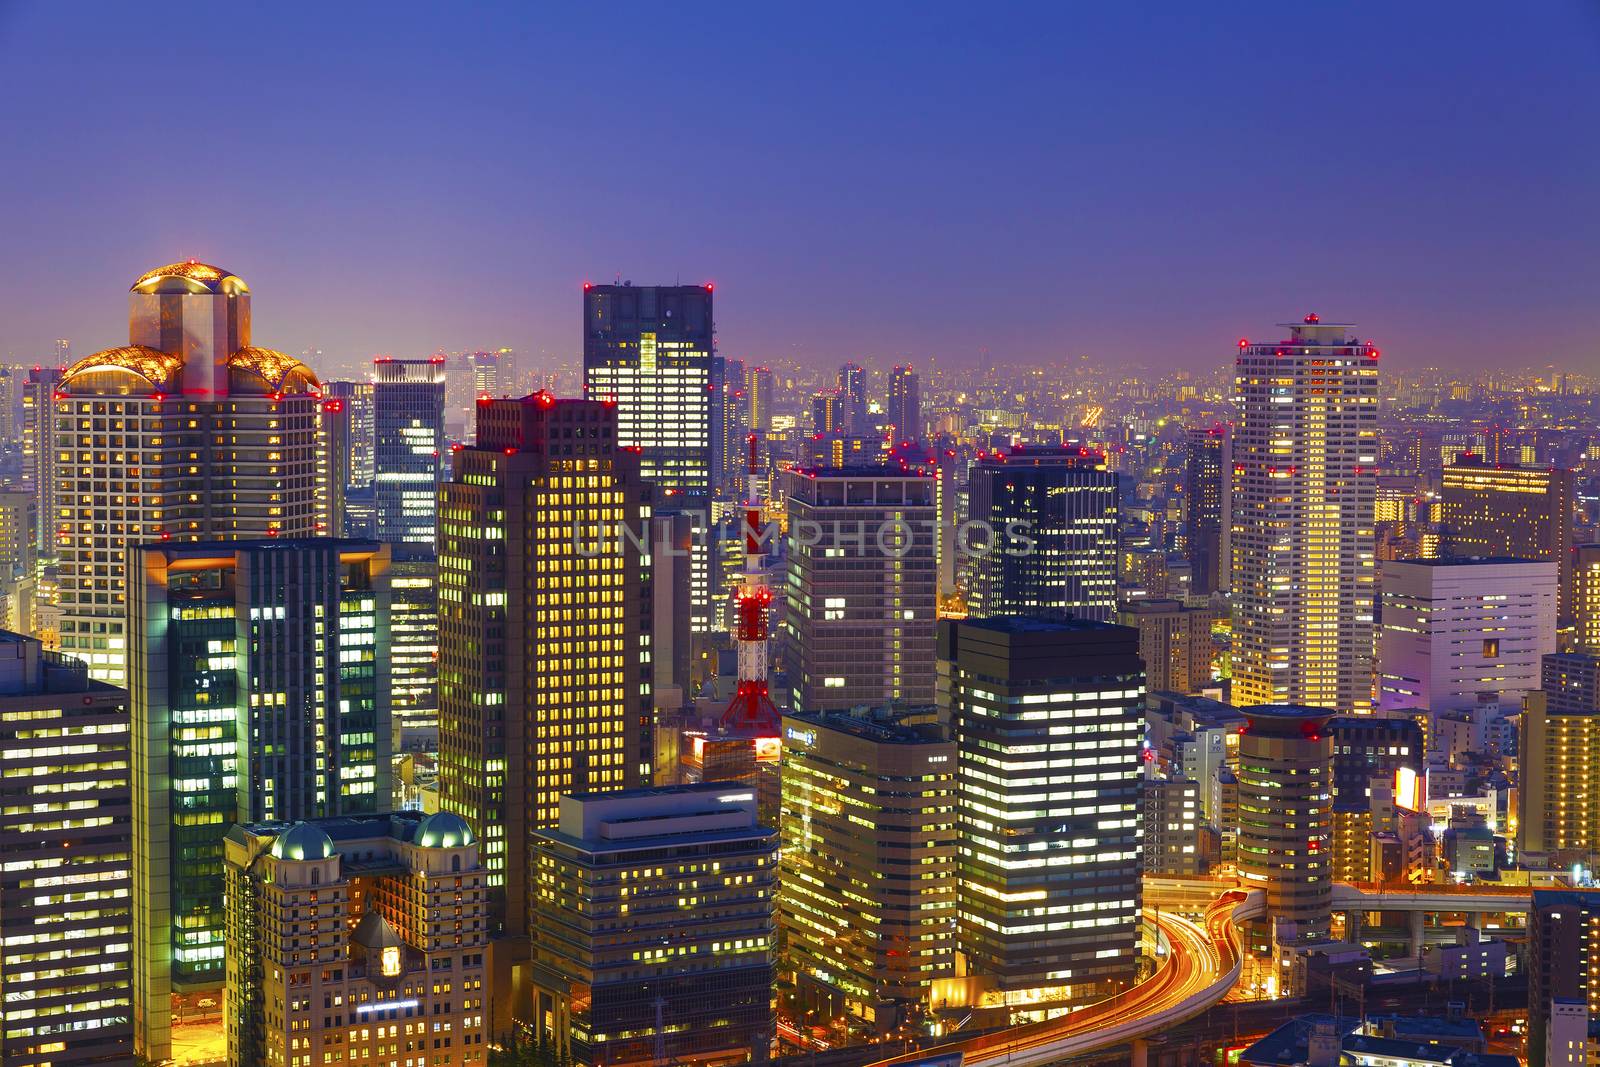 Osaka night view in Japan by kawing921